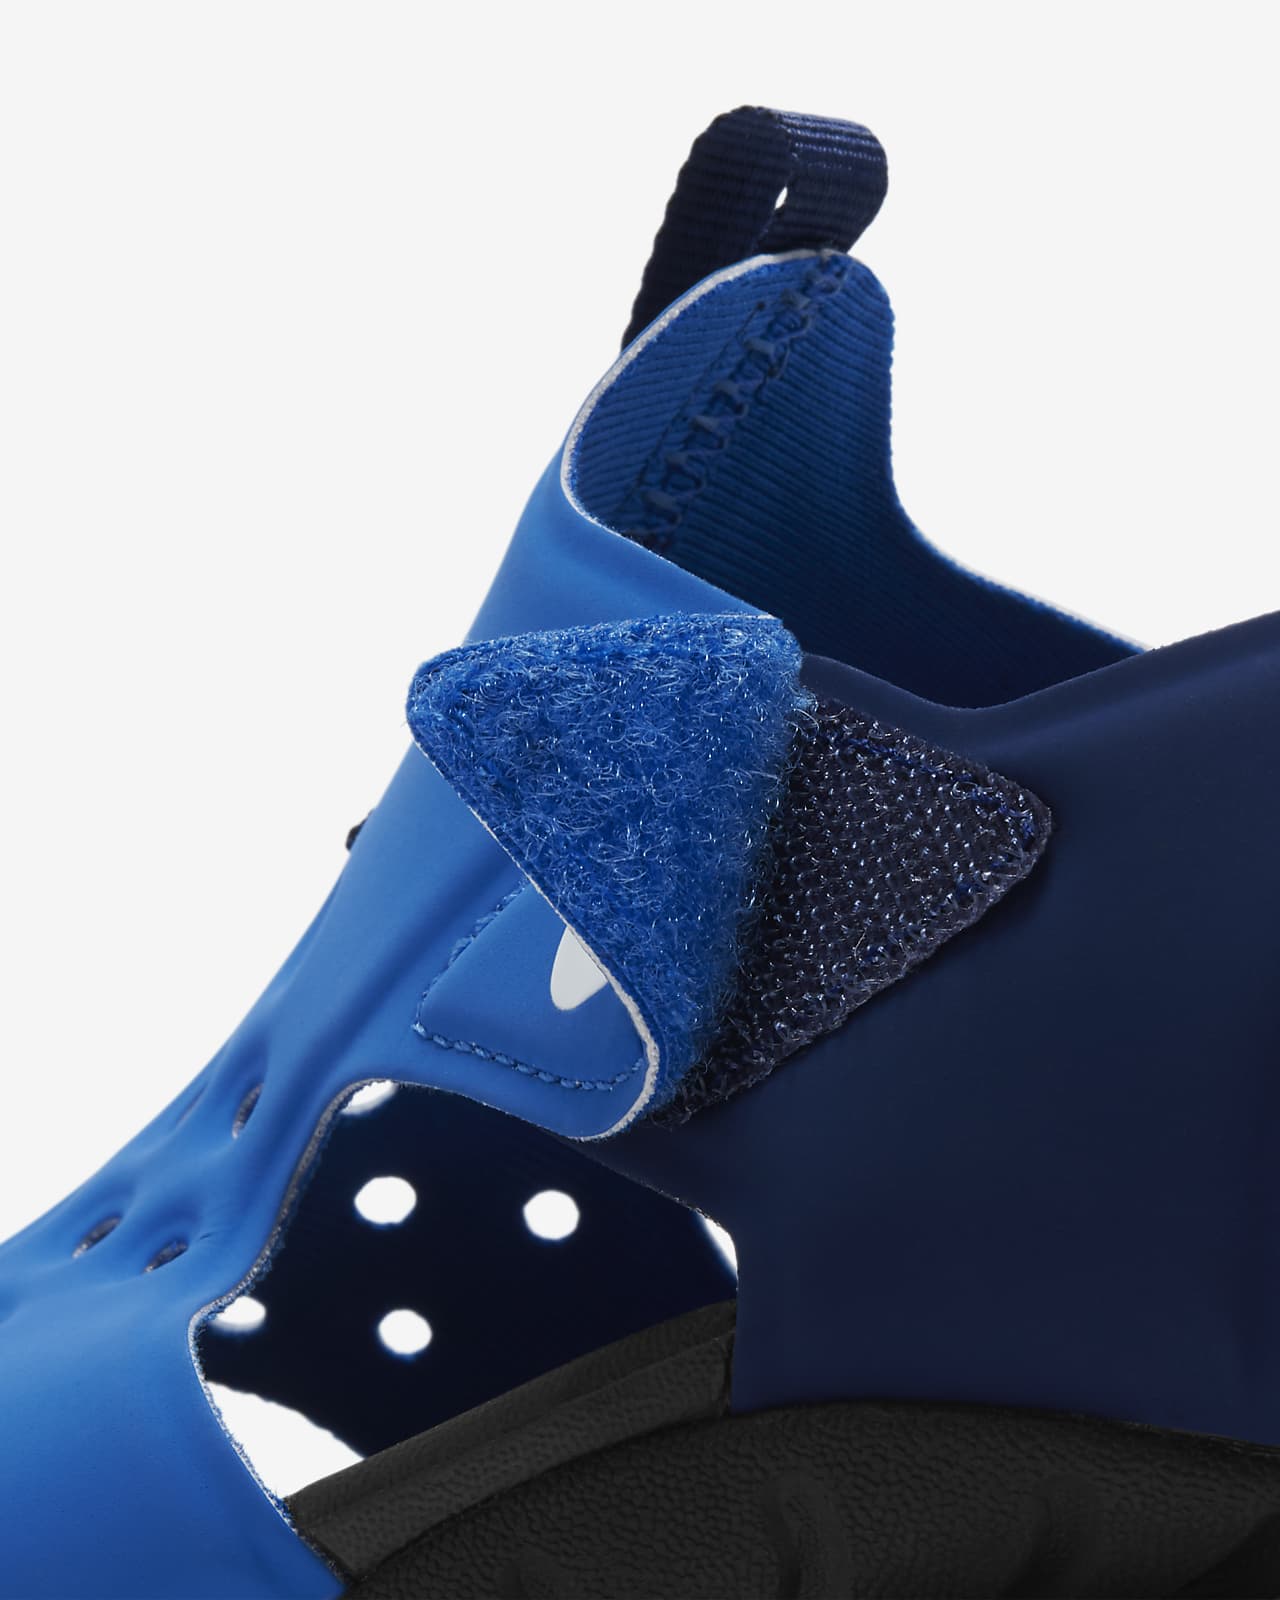 Sandalias para talla pequeña Sunray Protect 2. Nike.com